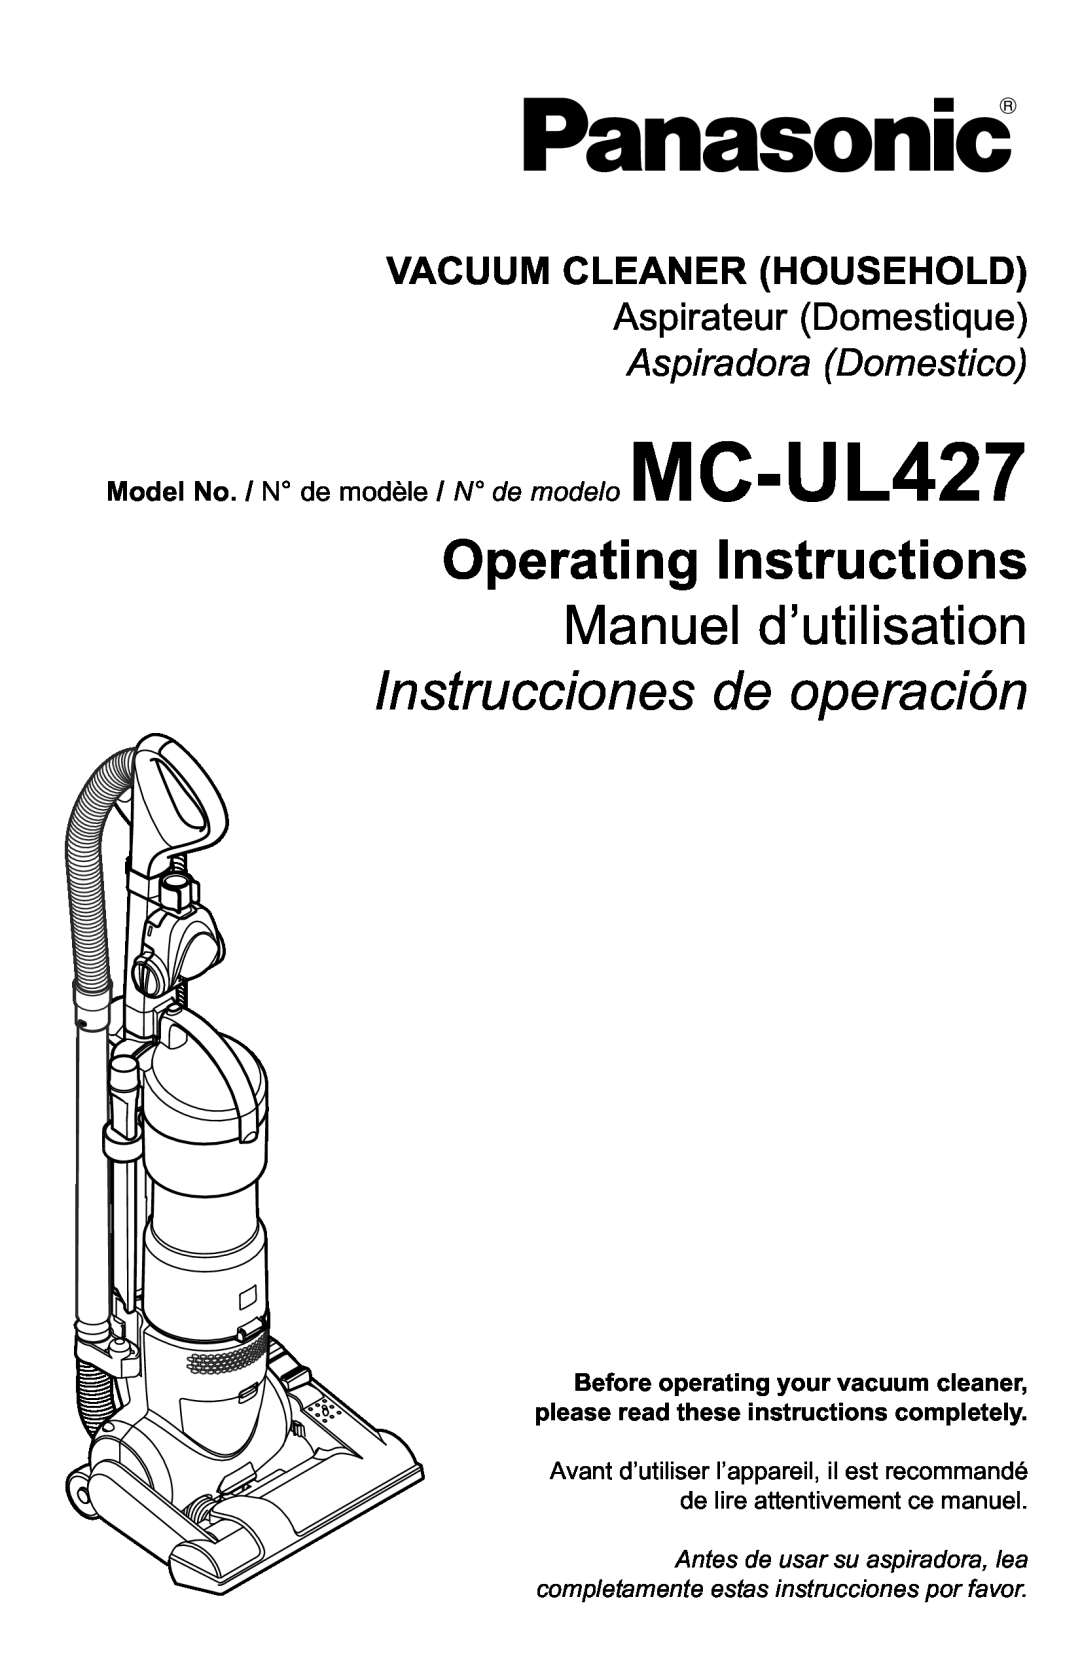 Panasonic MC-UL427 operating instructions Operating Instructions, Manuel d’utilisation, Vacuum Cleaner Household 